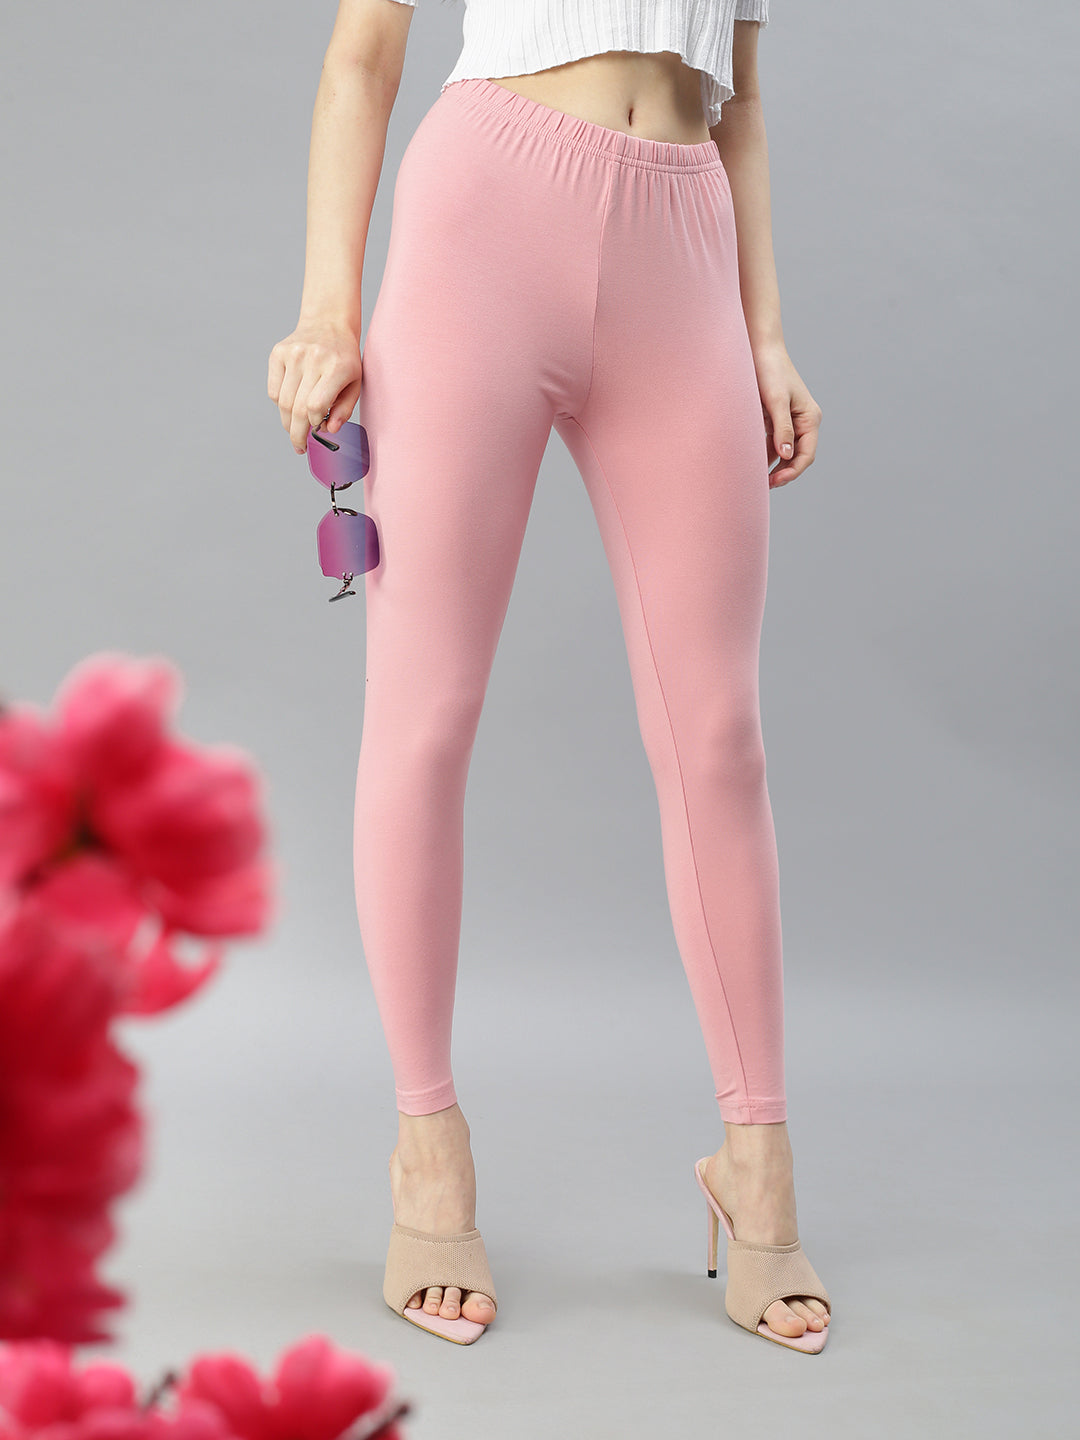 Solid Baby Pink Leggings | Yellow leggings, Pink leggings, Hot high heels